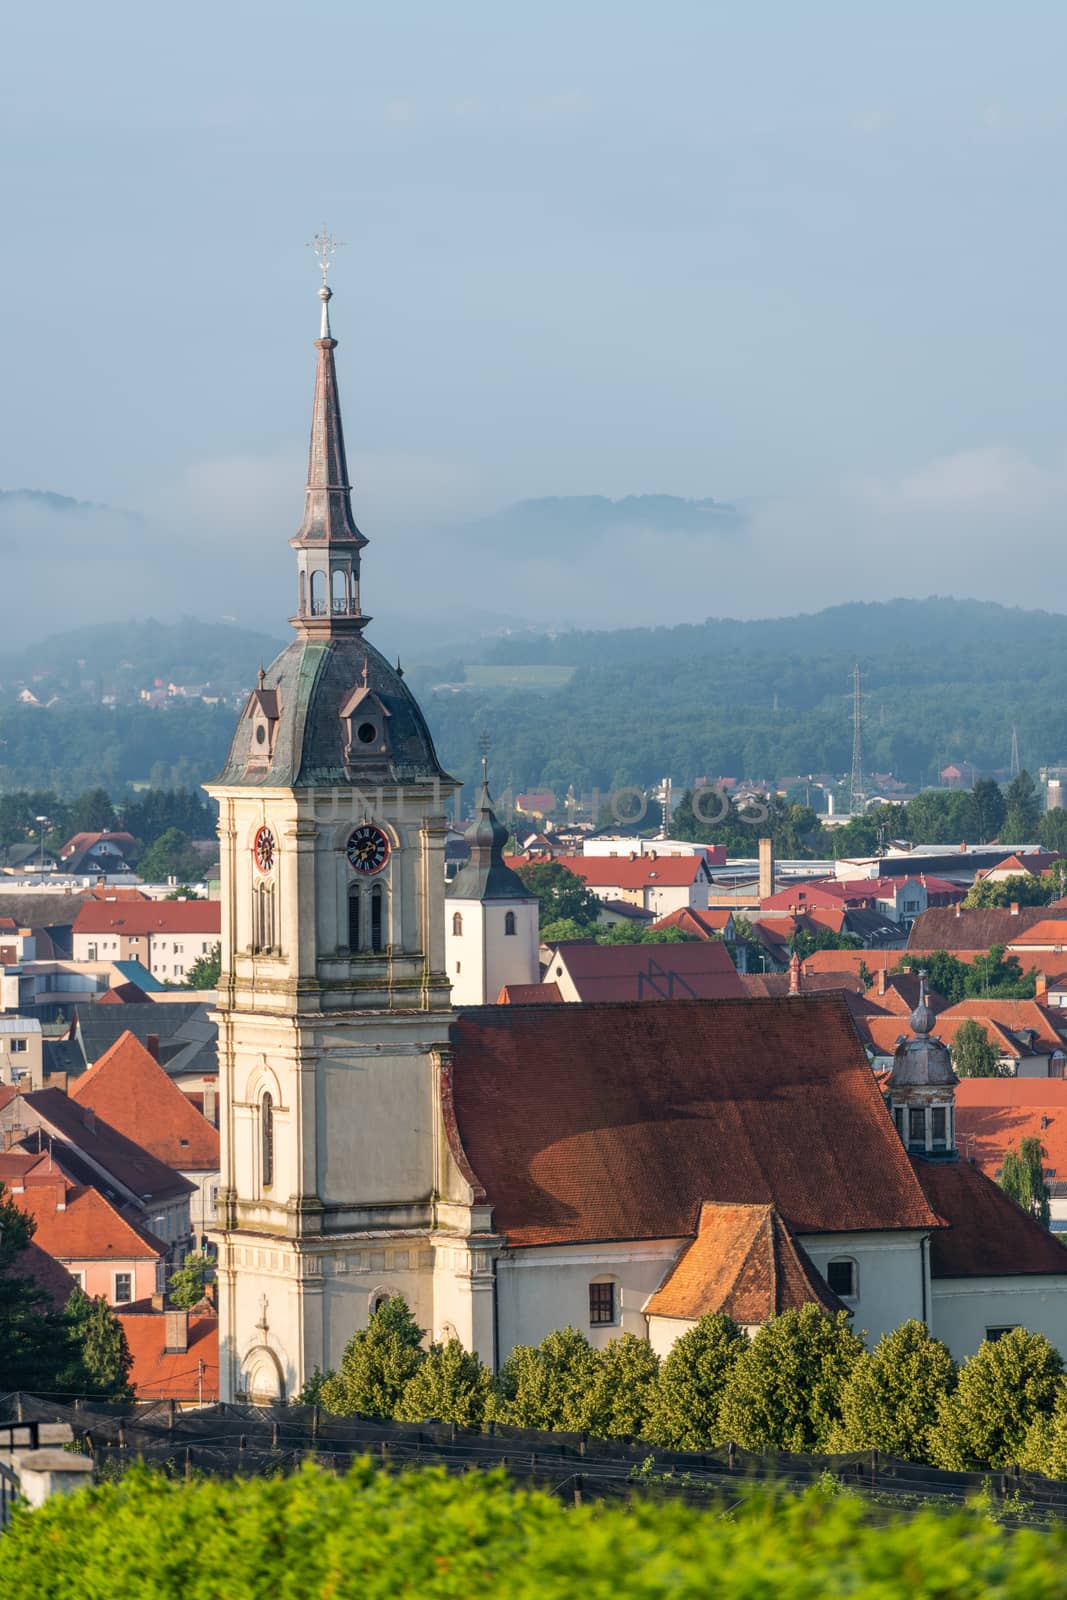 Church tower with clock, St. Bartholomew's church in Slovenska Bistrica, Slovenia